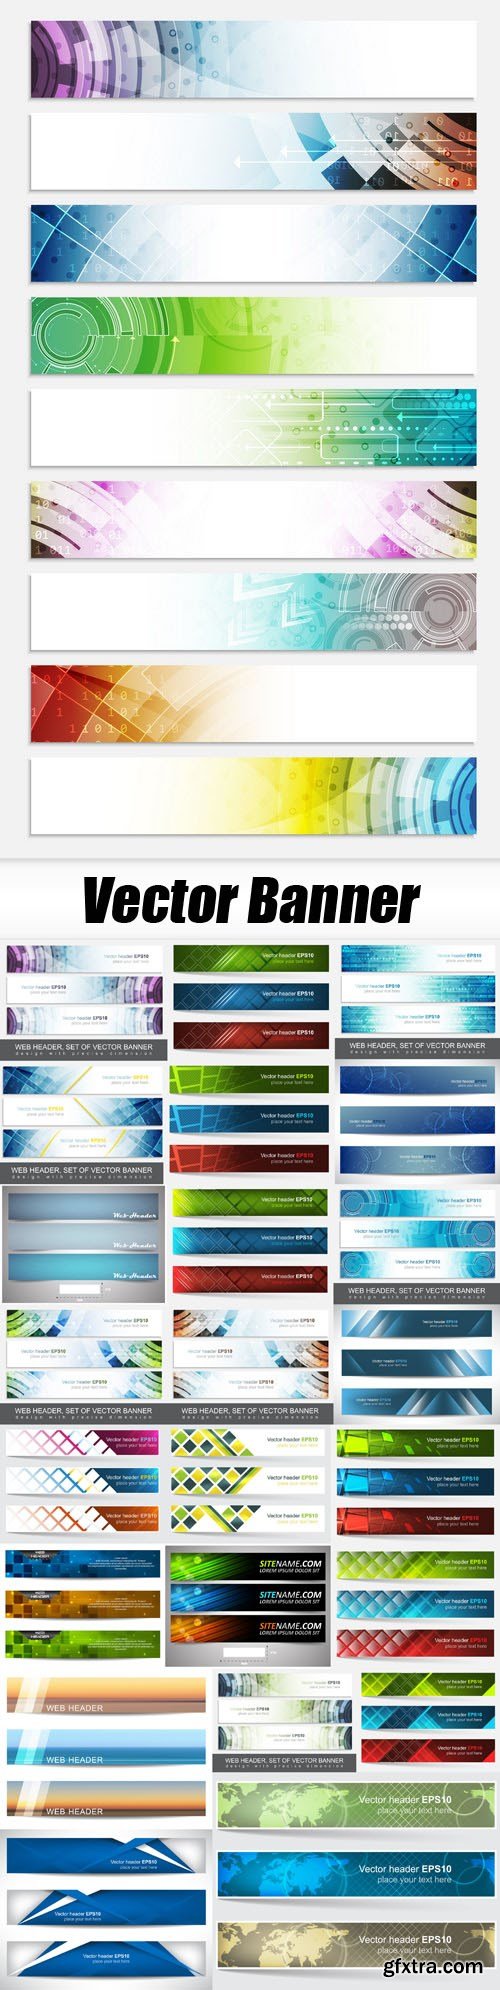 Vector Banner - 24xEPS